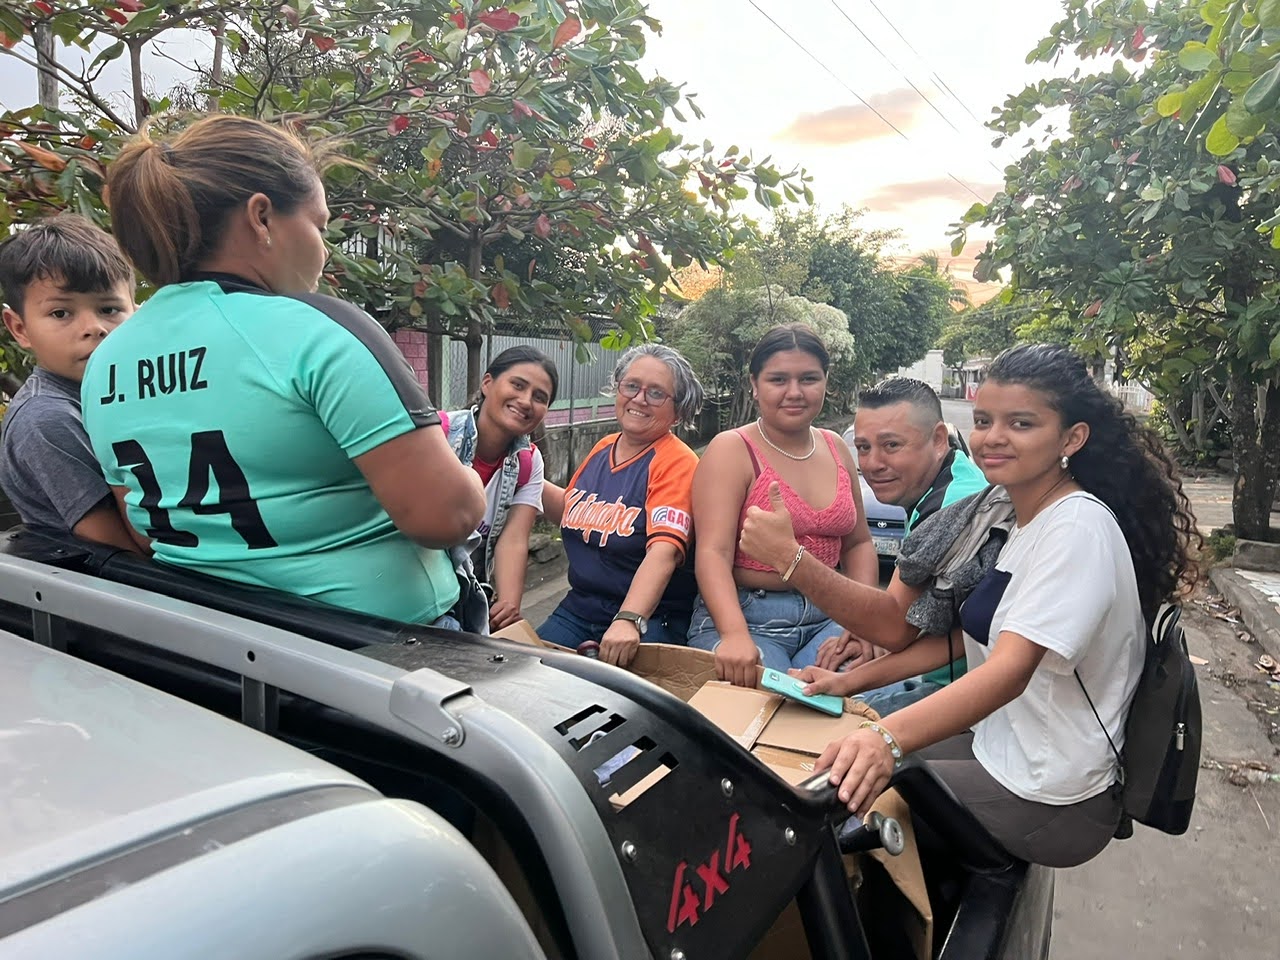 Ball gear arriving in Nicaragua